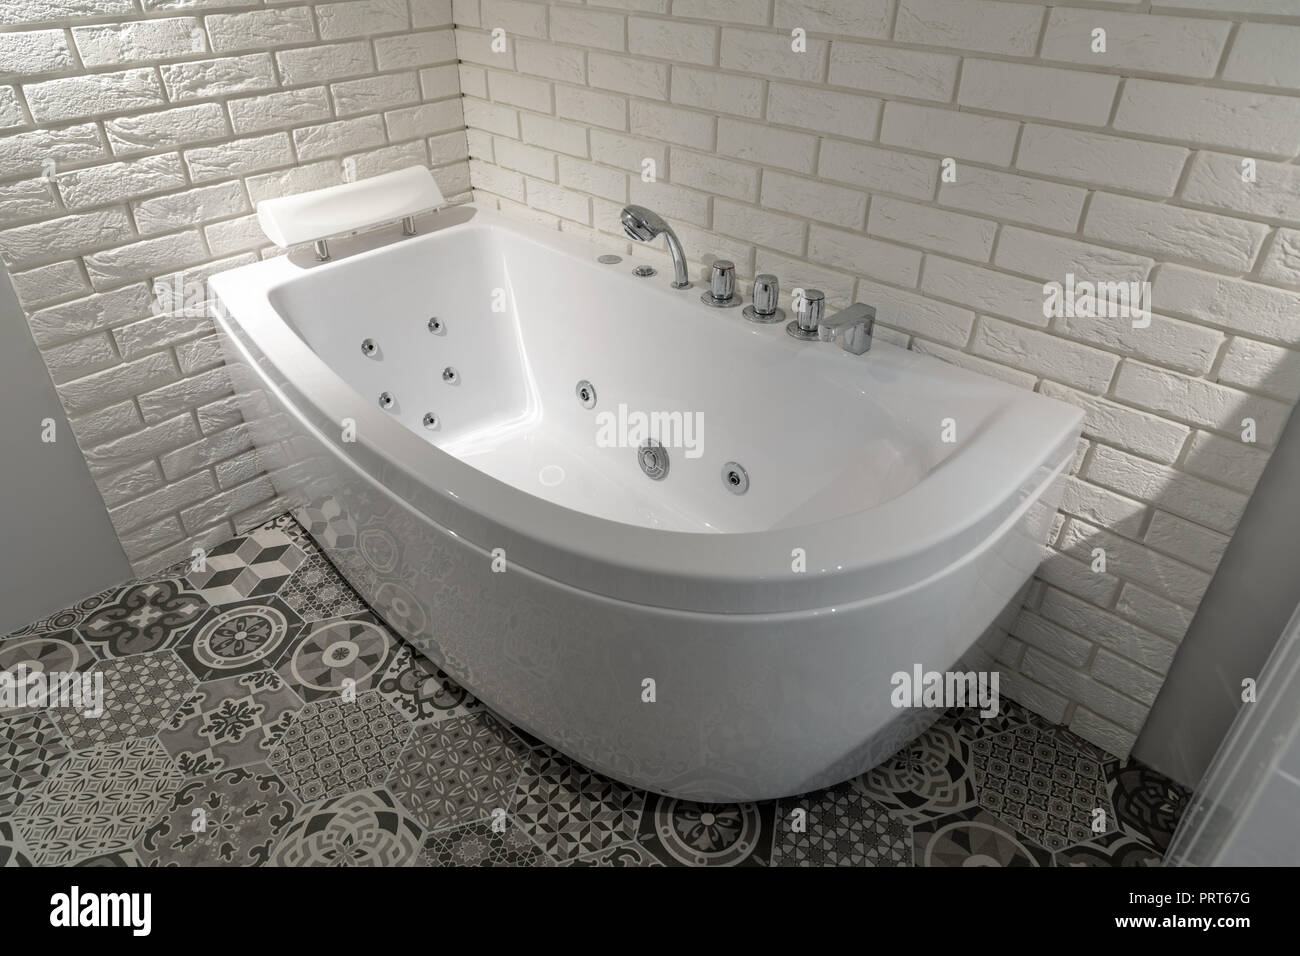 modern domestic bathroom interior with hydromassage bath Stock Photo